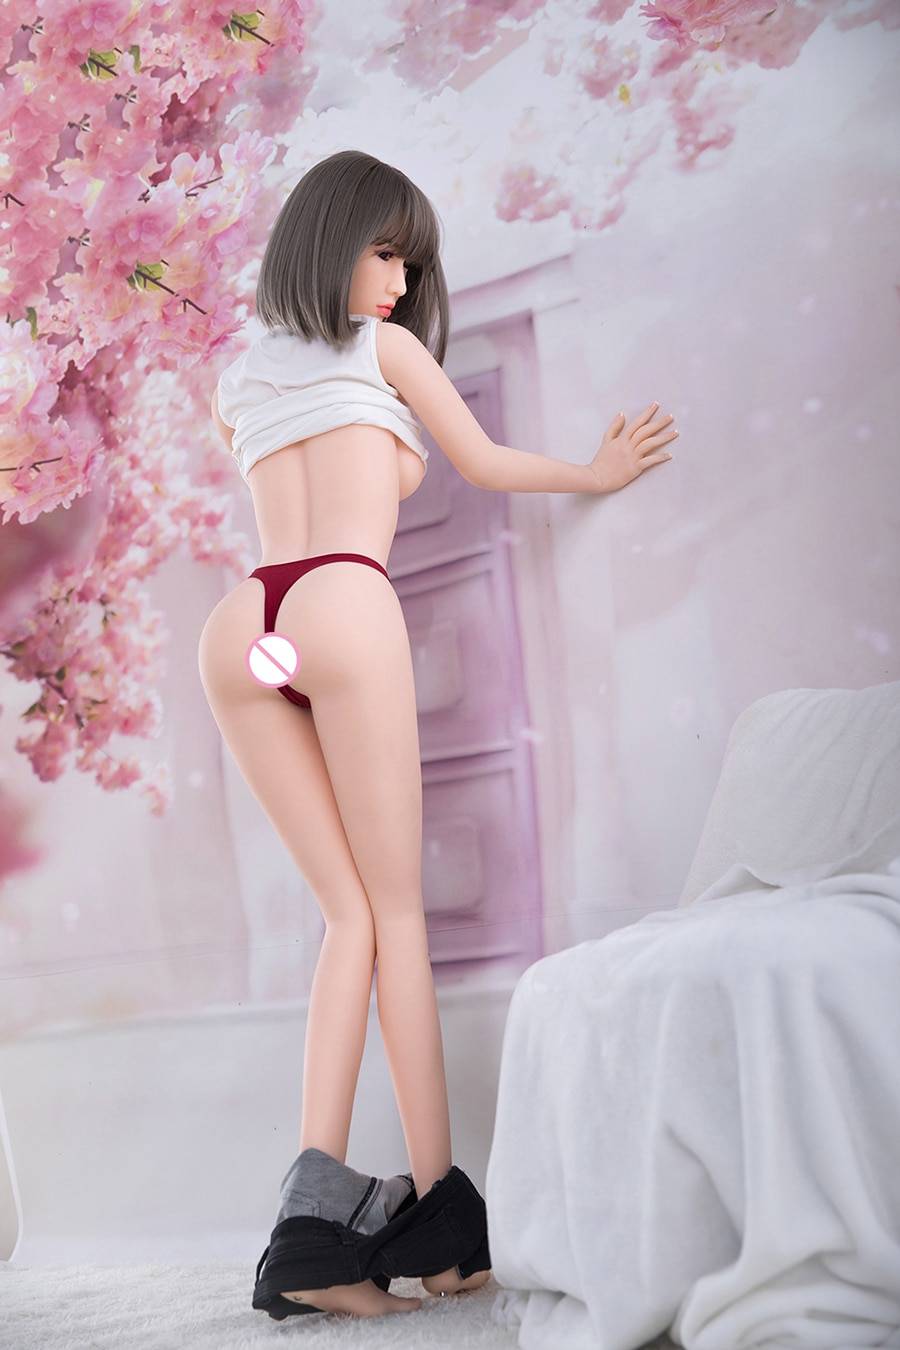 Female Soft Sex Doll Adult Products 1ef722433d607dd9d2b8b7: China|United States